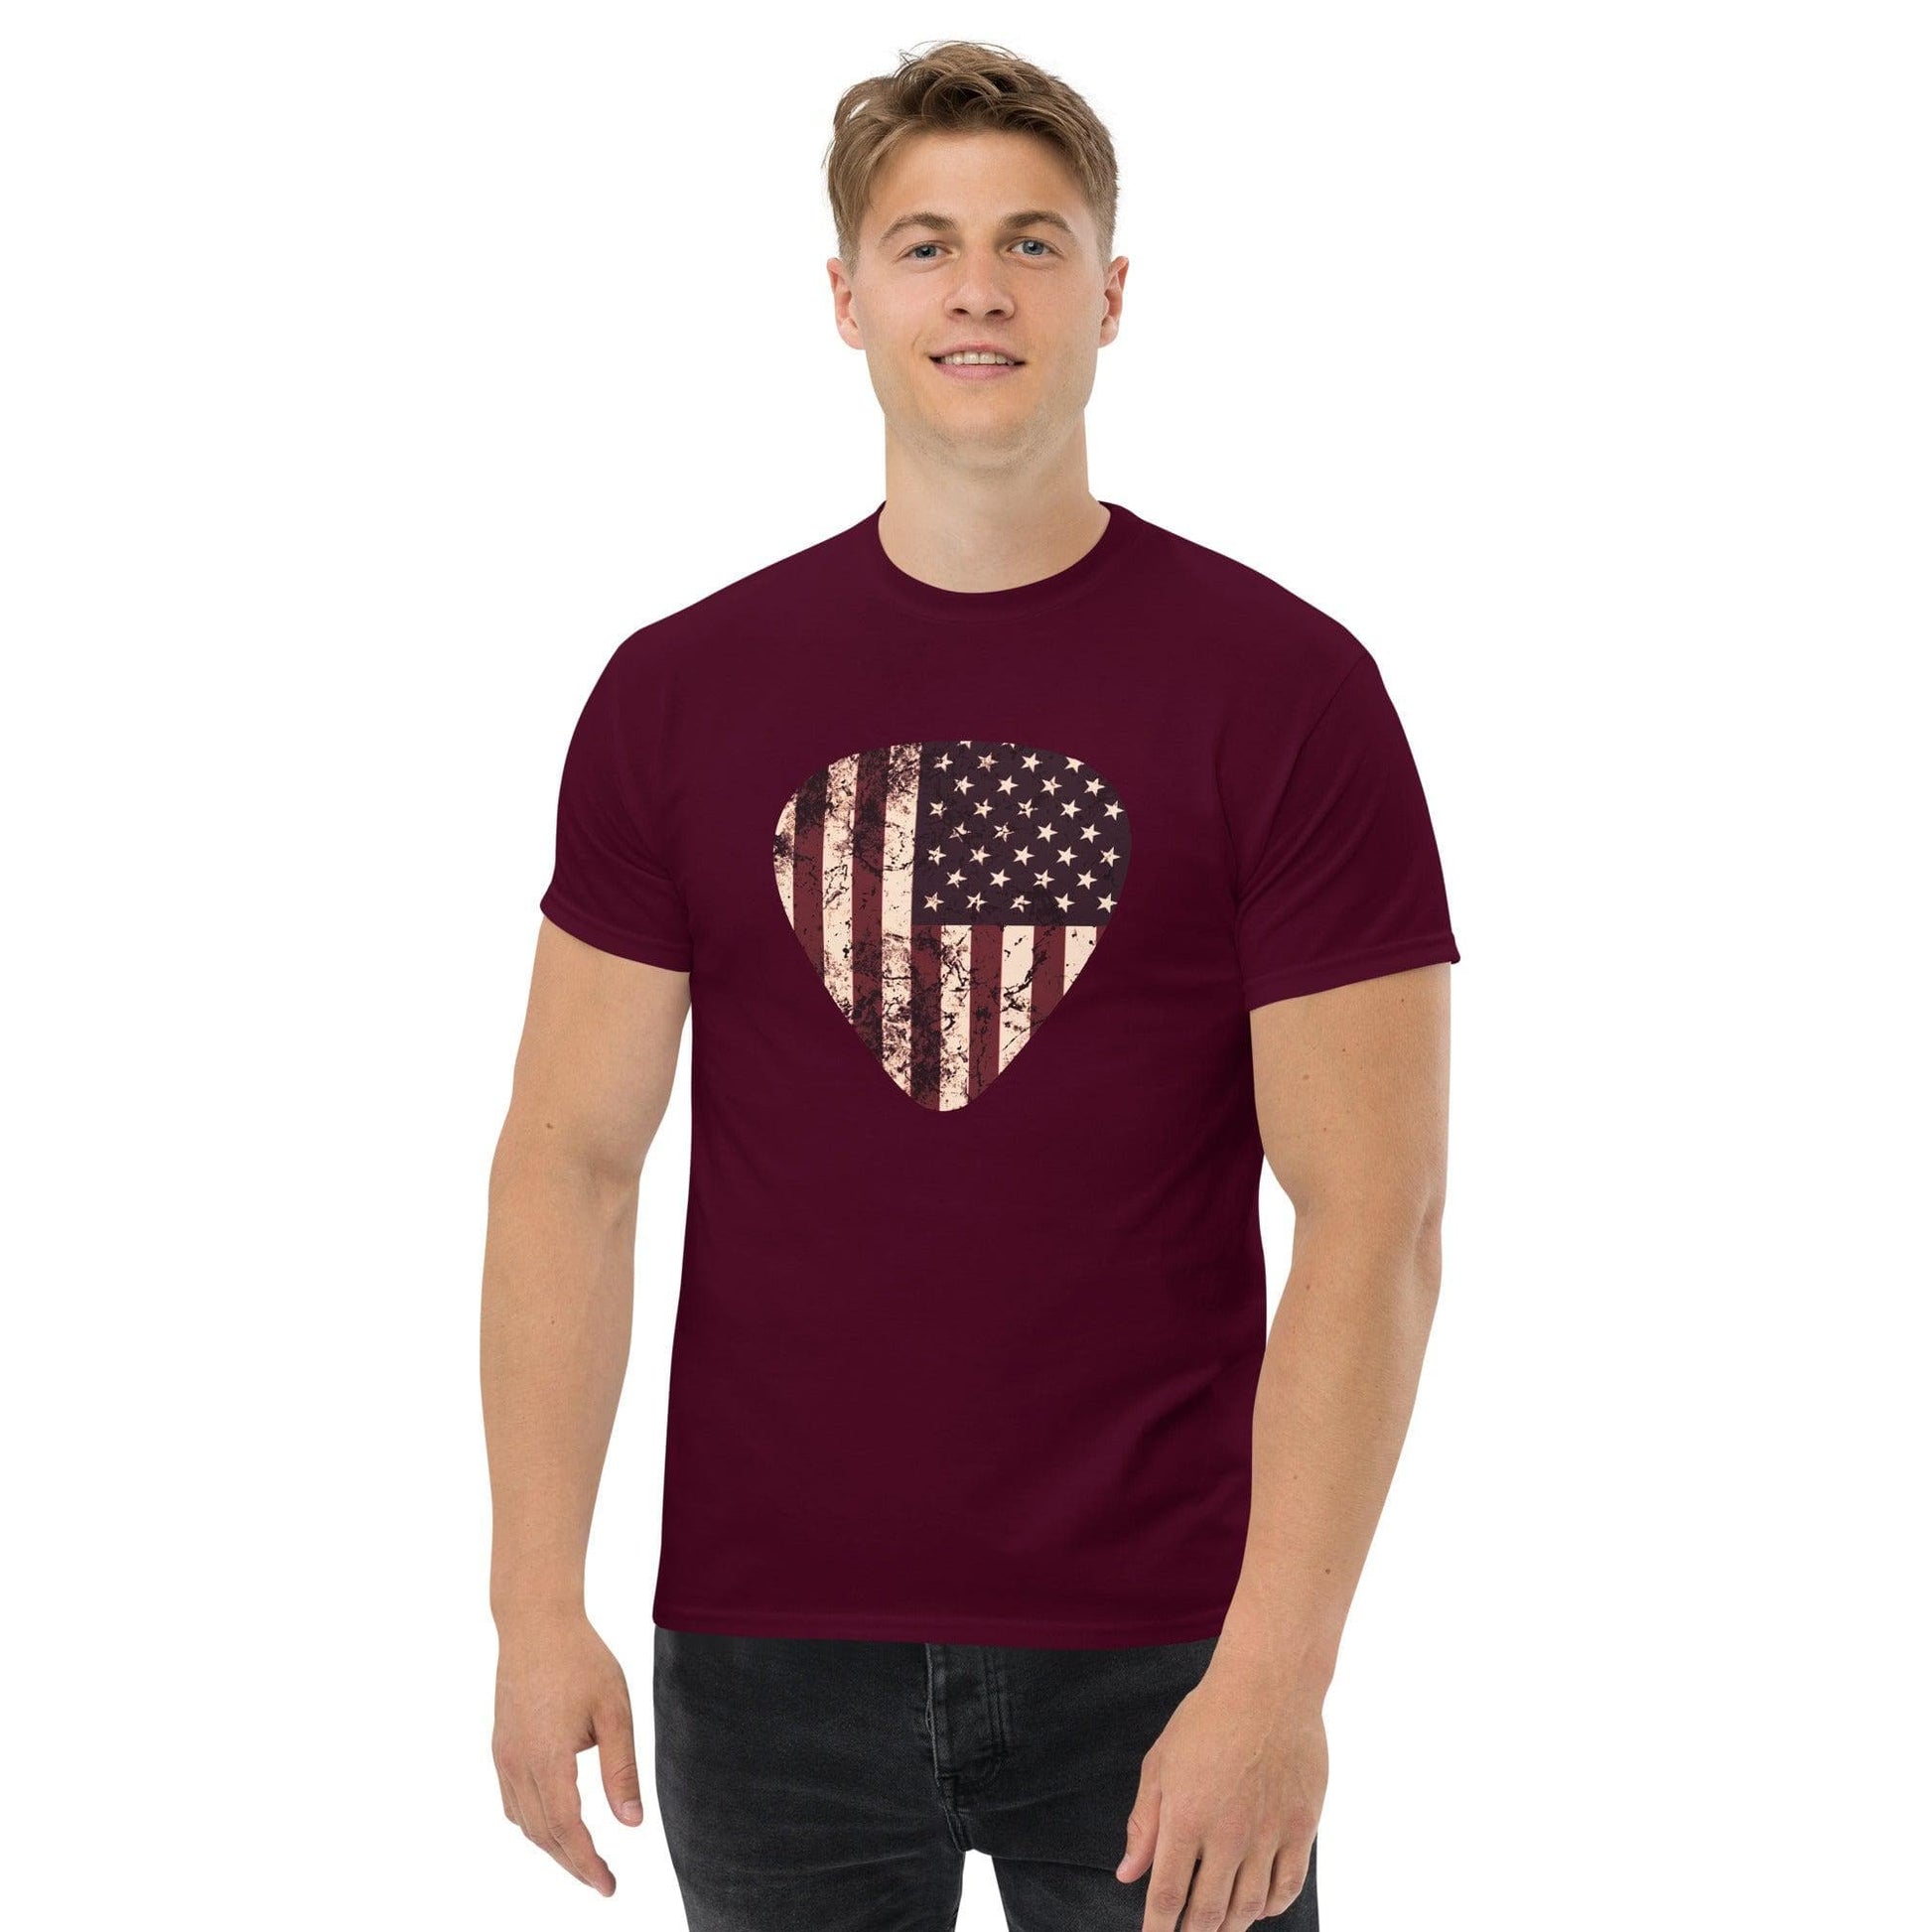 Vintage American Flag Guitar Pick T-shirt